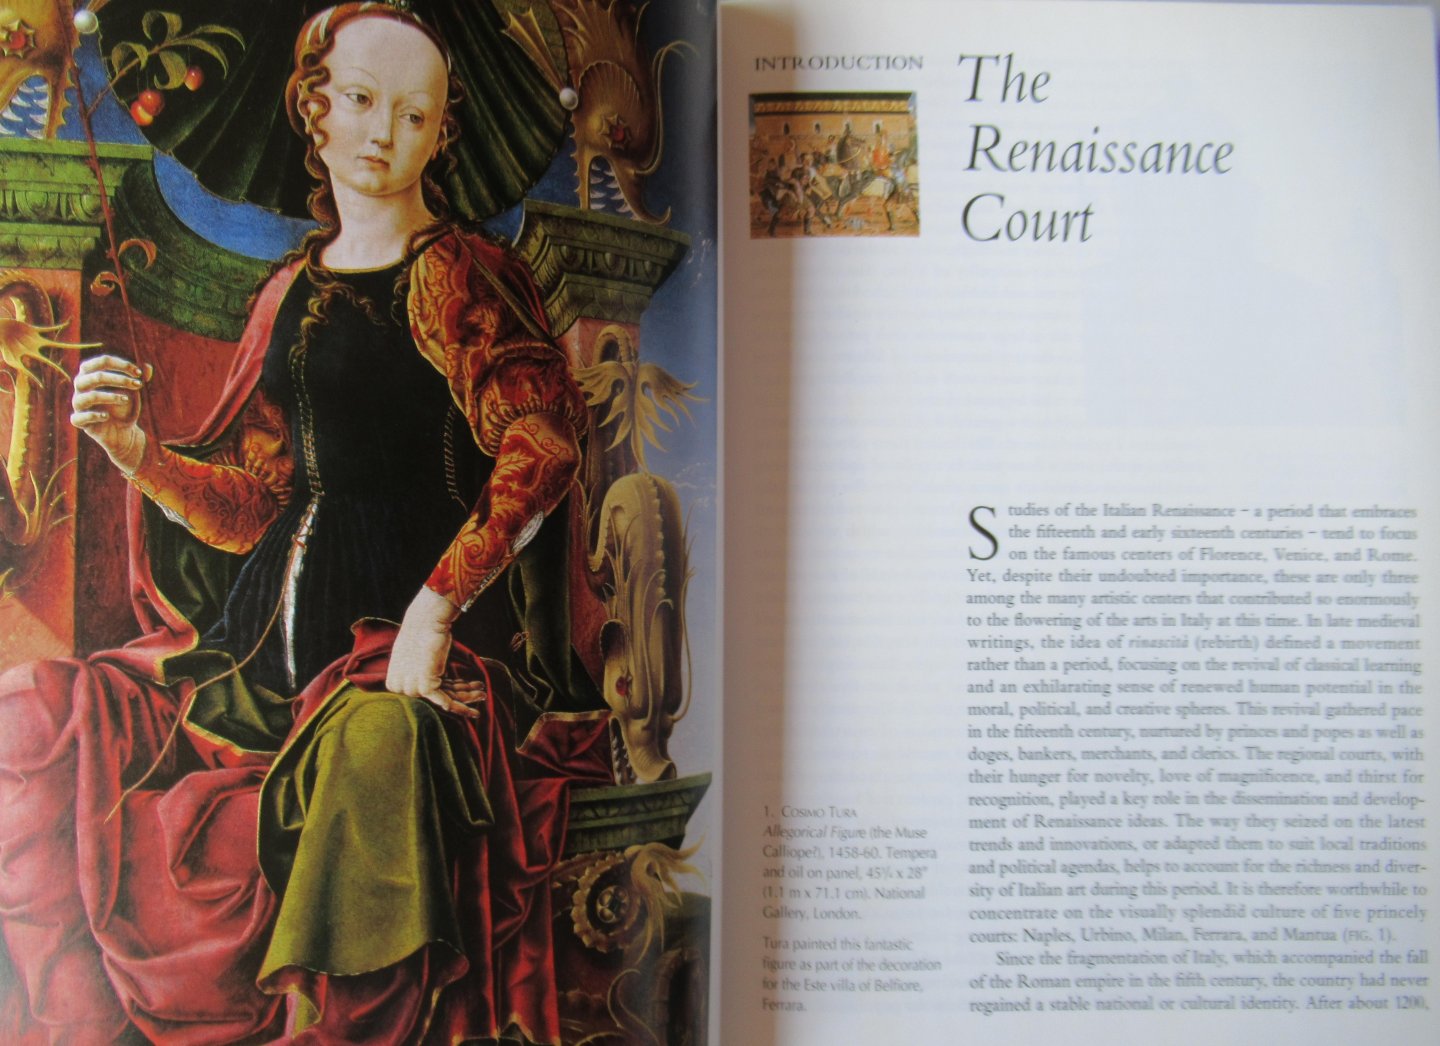 Cole, Alison - Art of the Italian renaissance courts